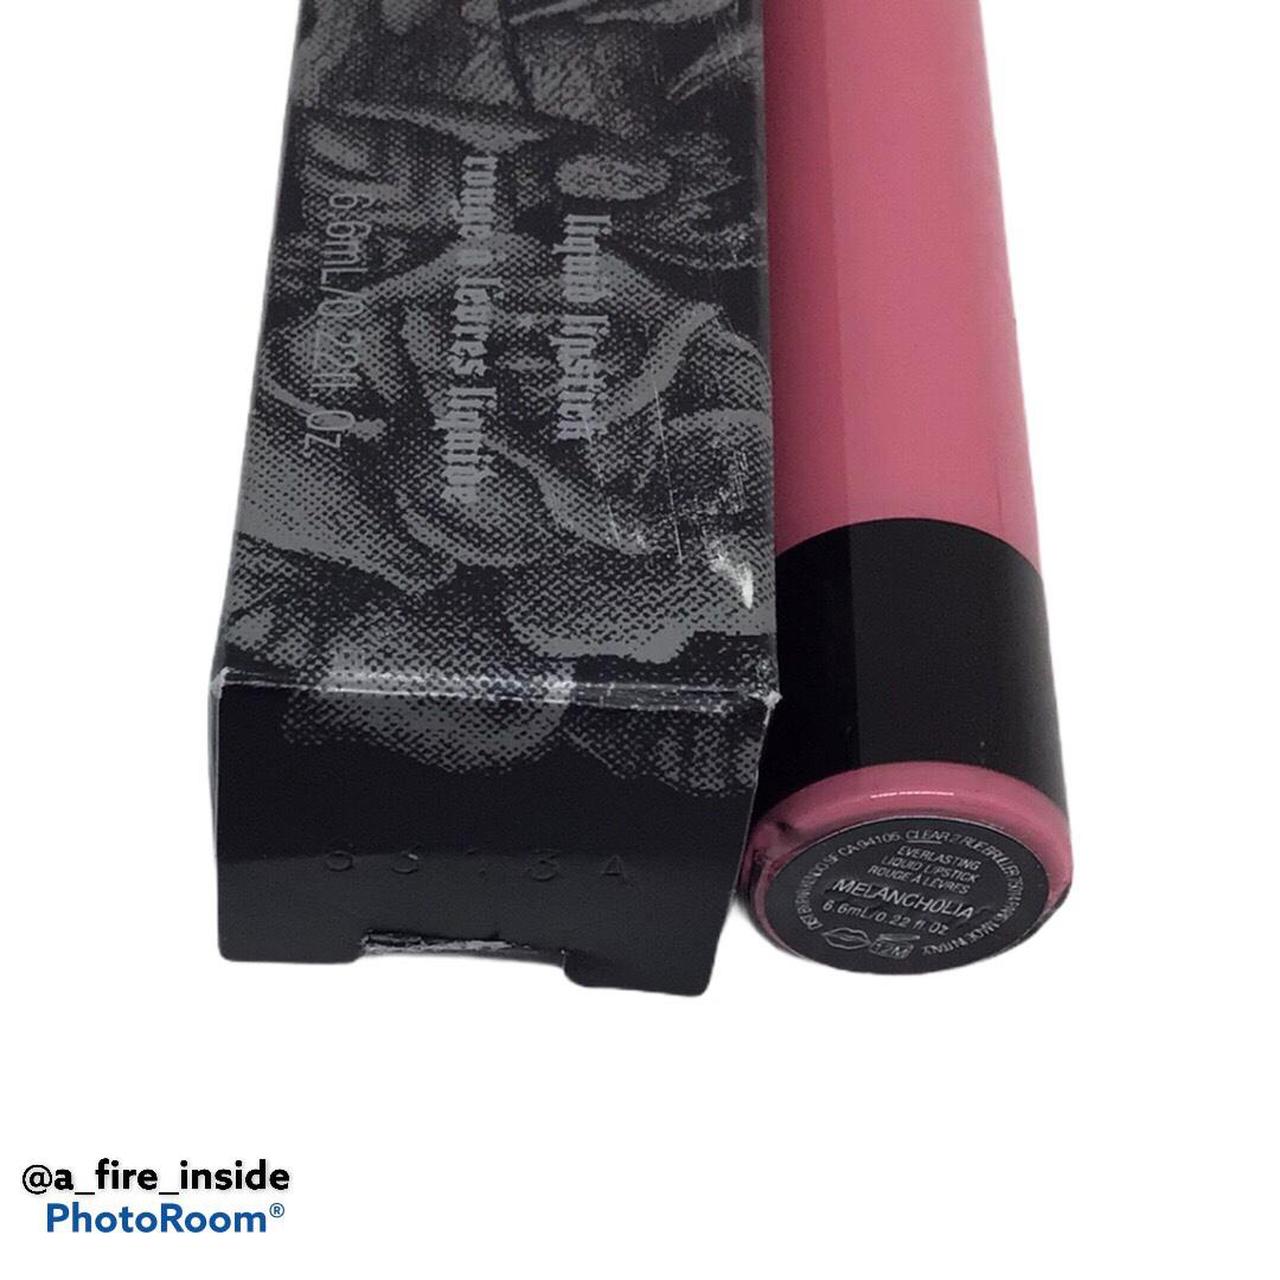 Product Image 3 - KVD everlasting liquid lipstick Melancholia